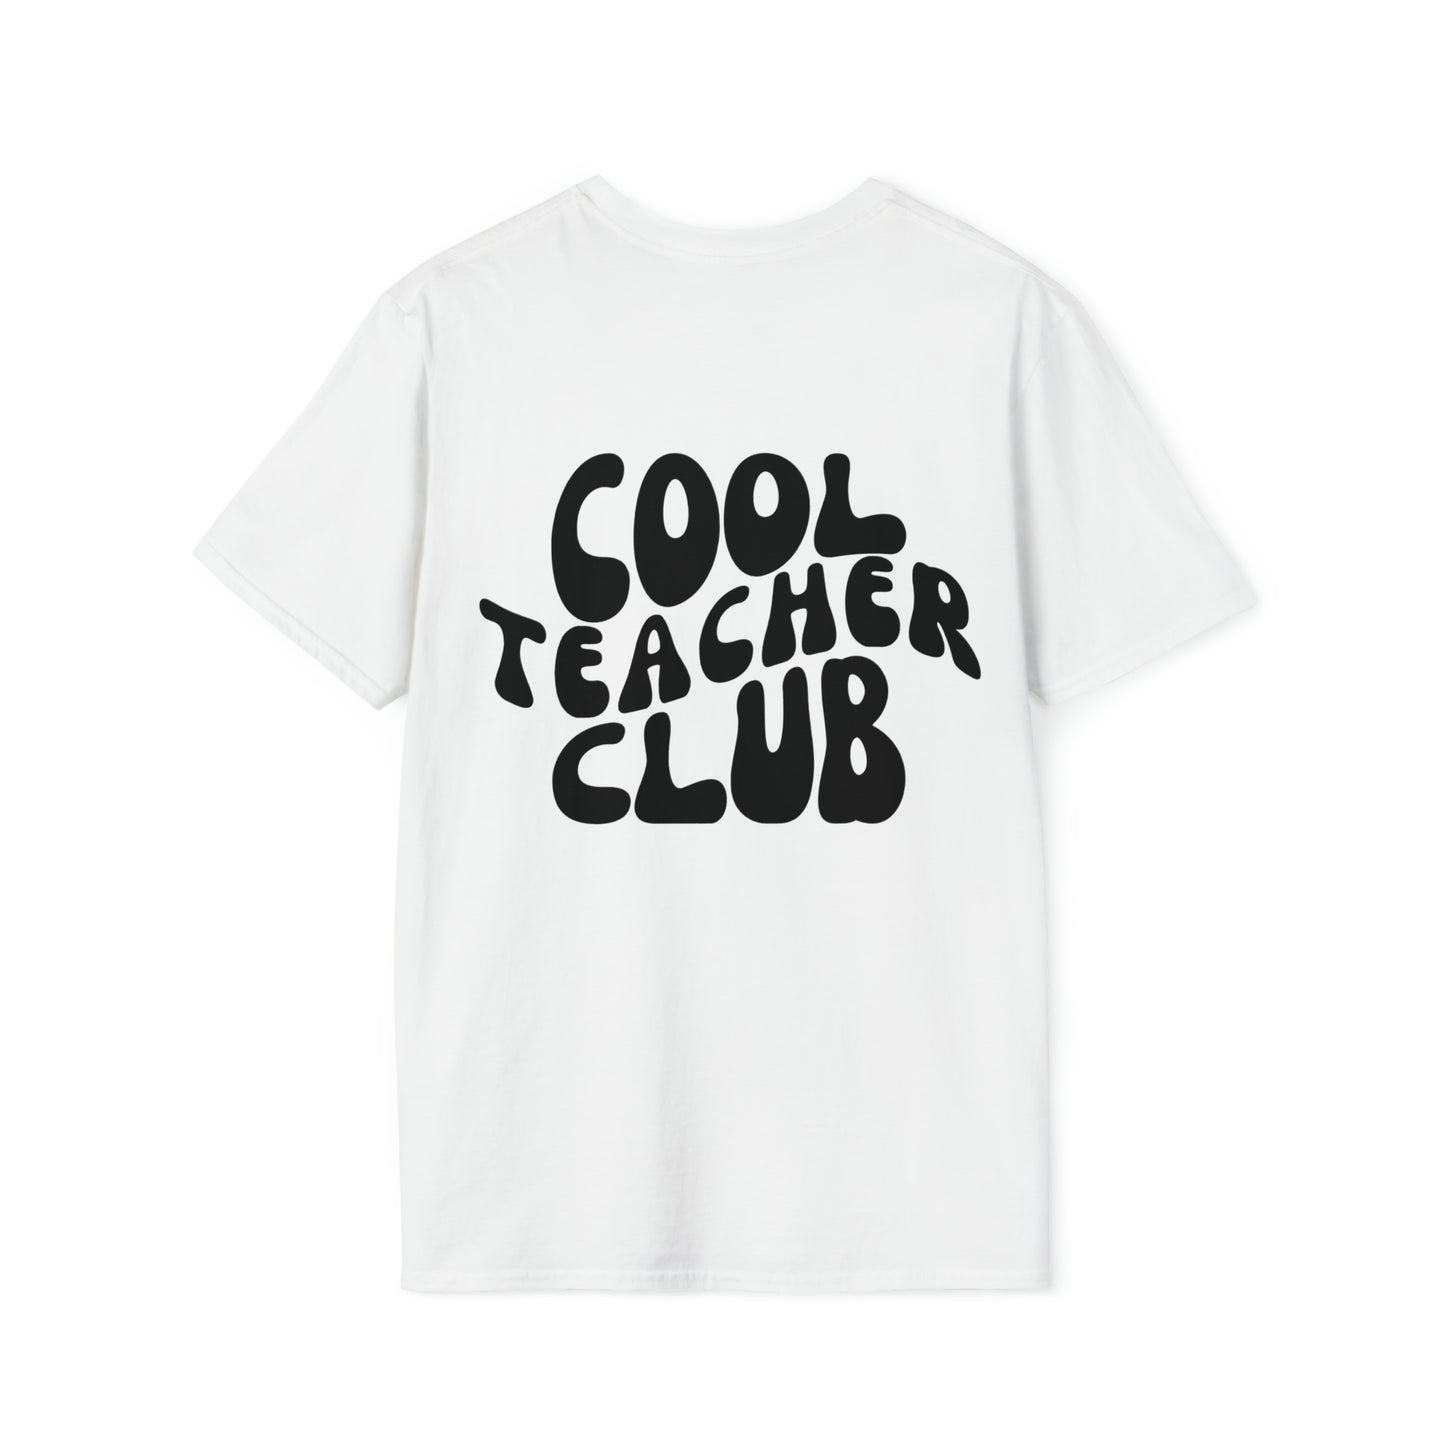 Cool Teacher Club - Adult T-Shirt